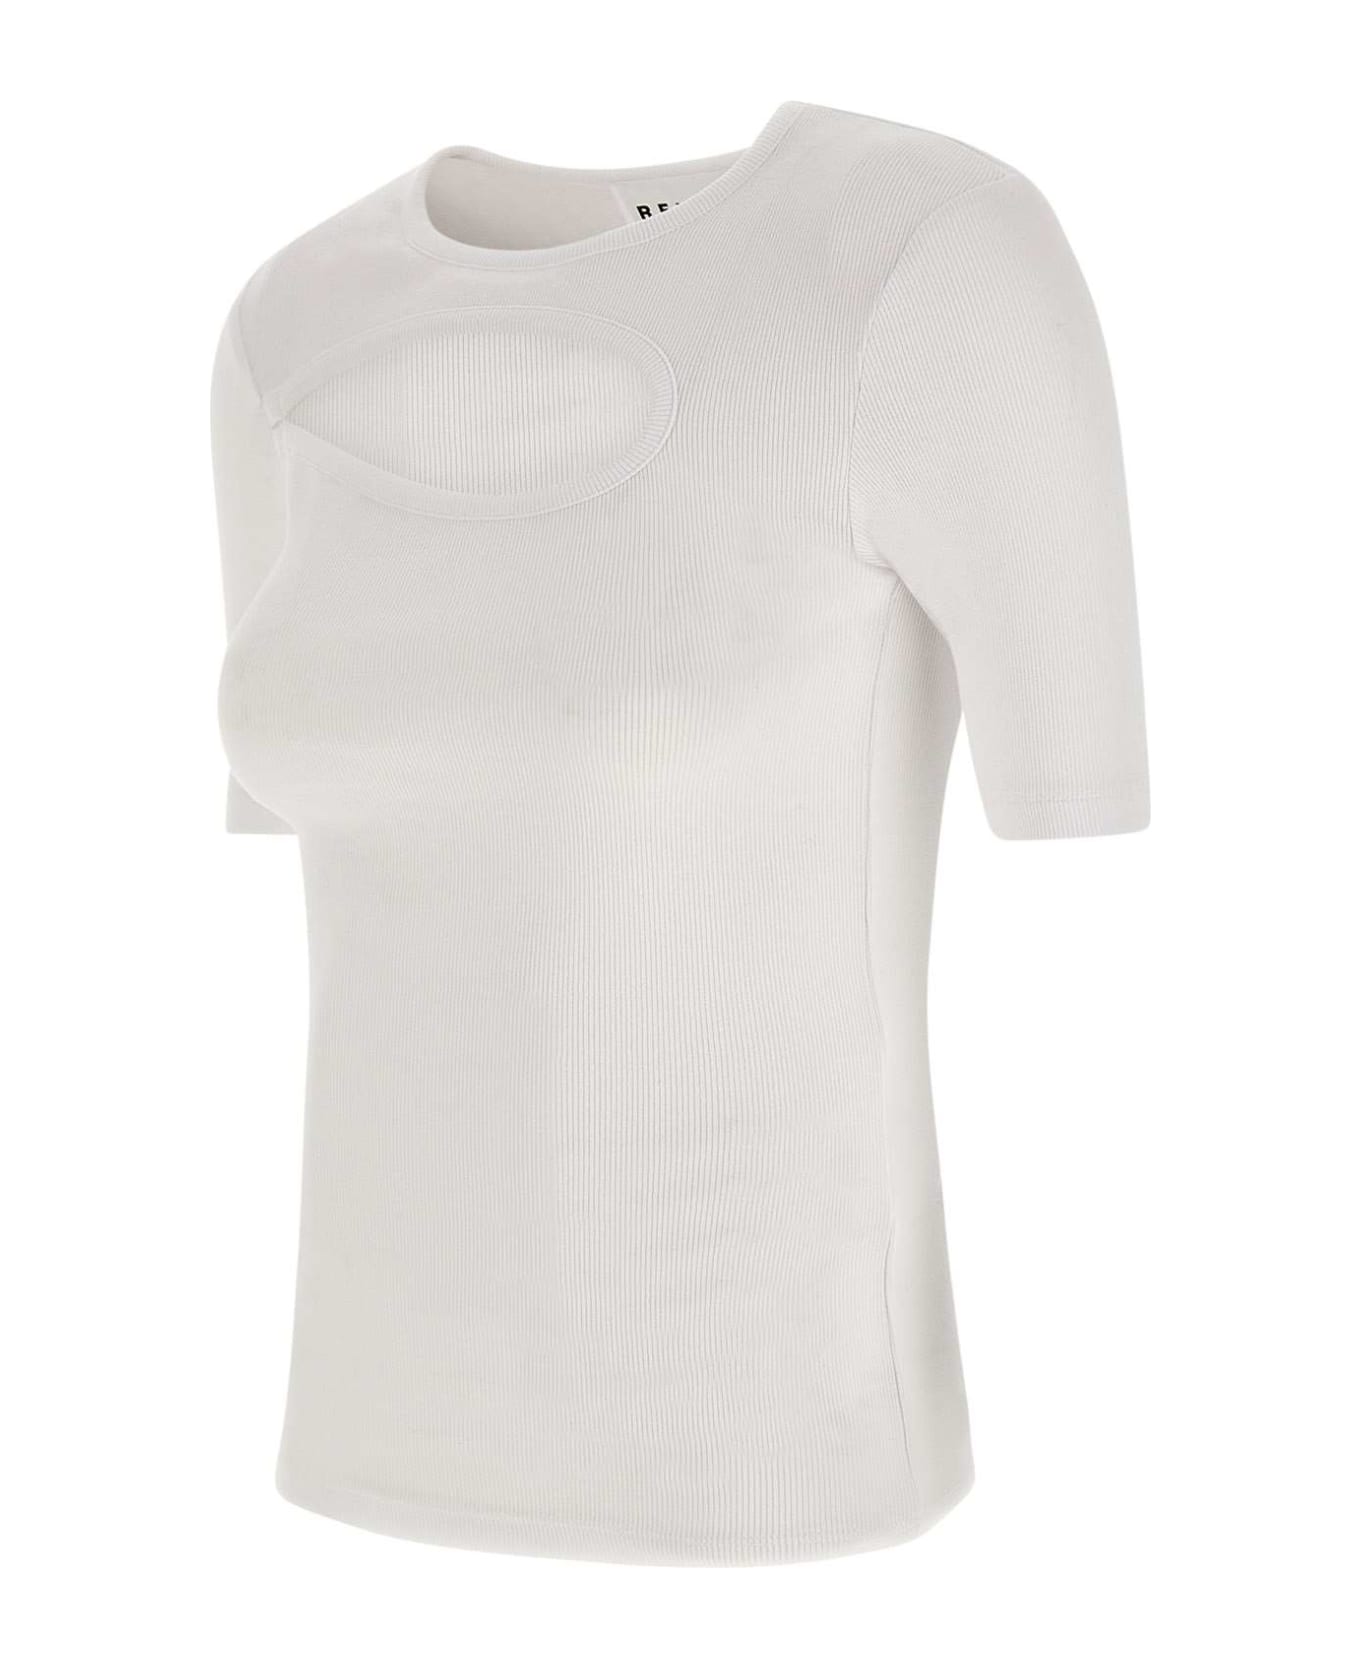 REMAIN Birger Christensen Cotton Jersey T-shirt - WHITE